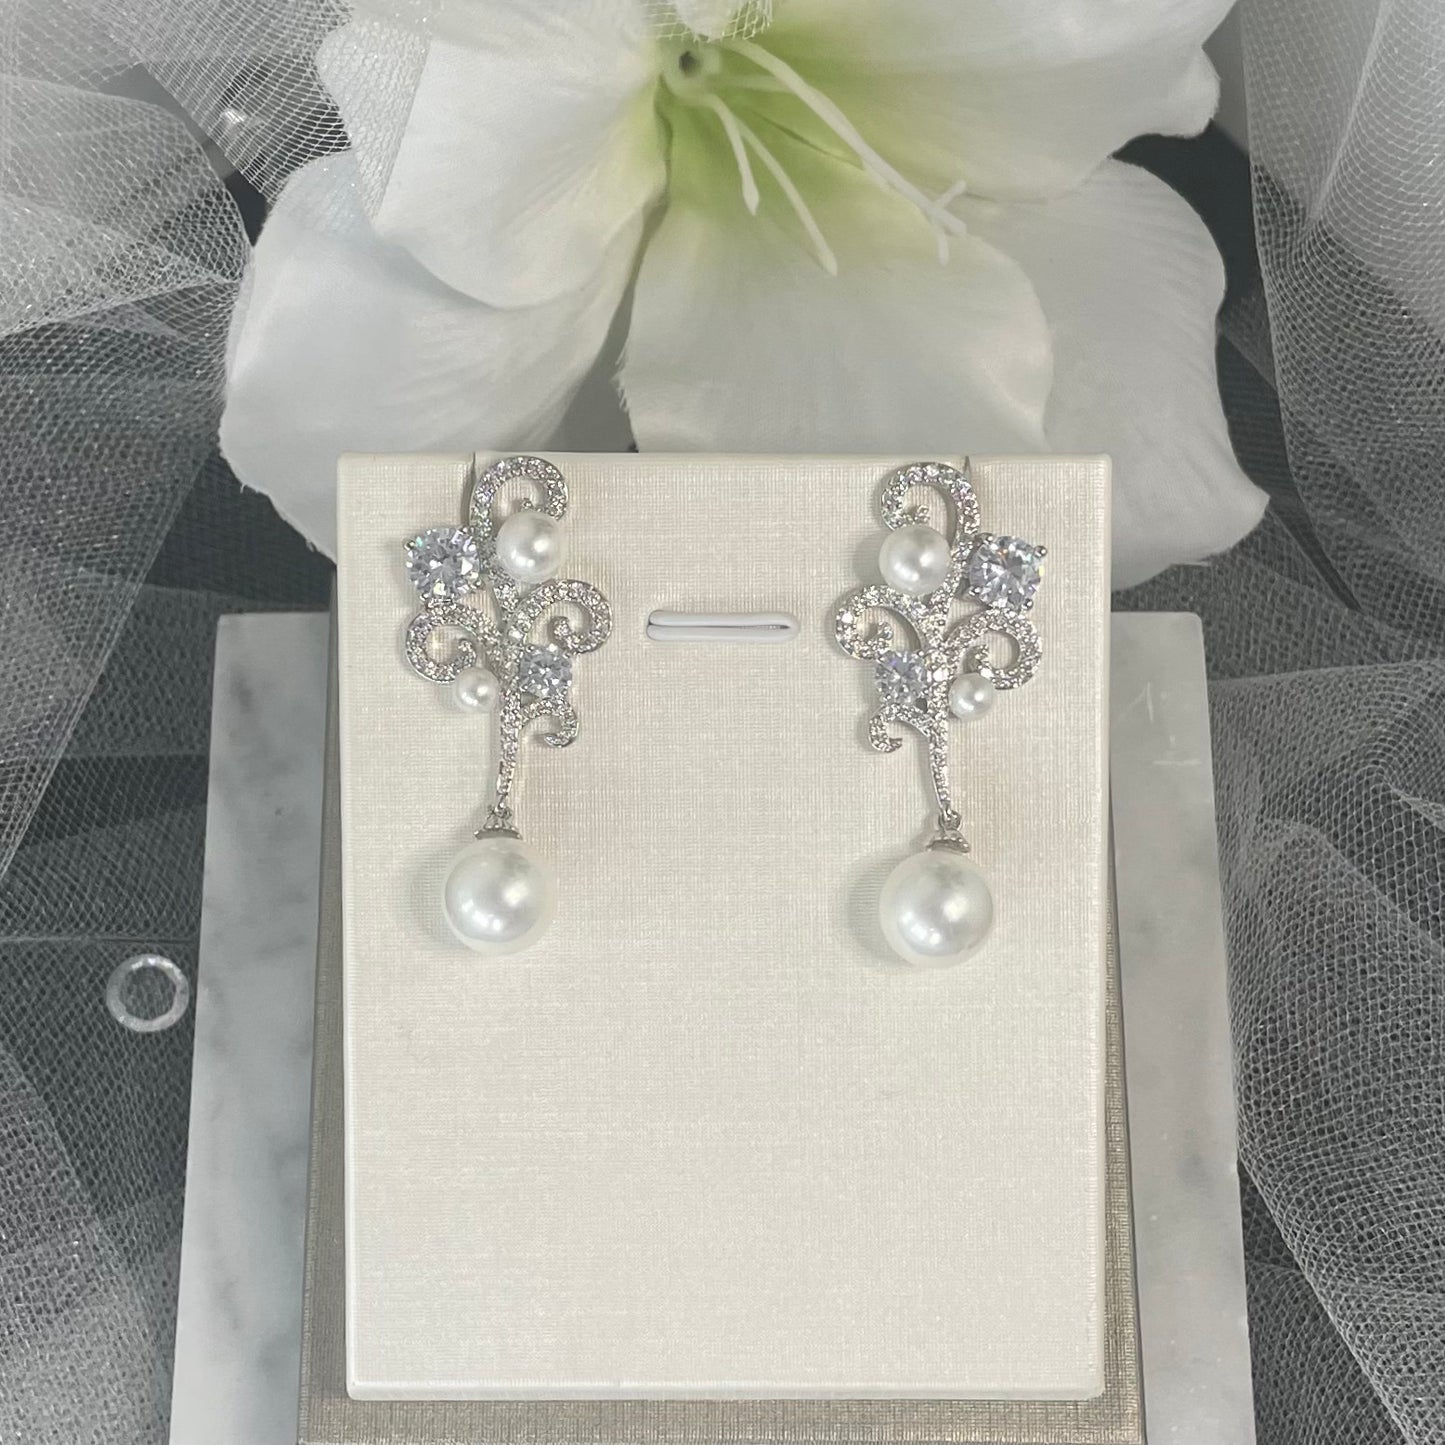 Ariana crystal pearl earrings